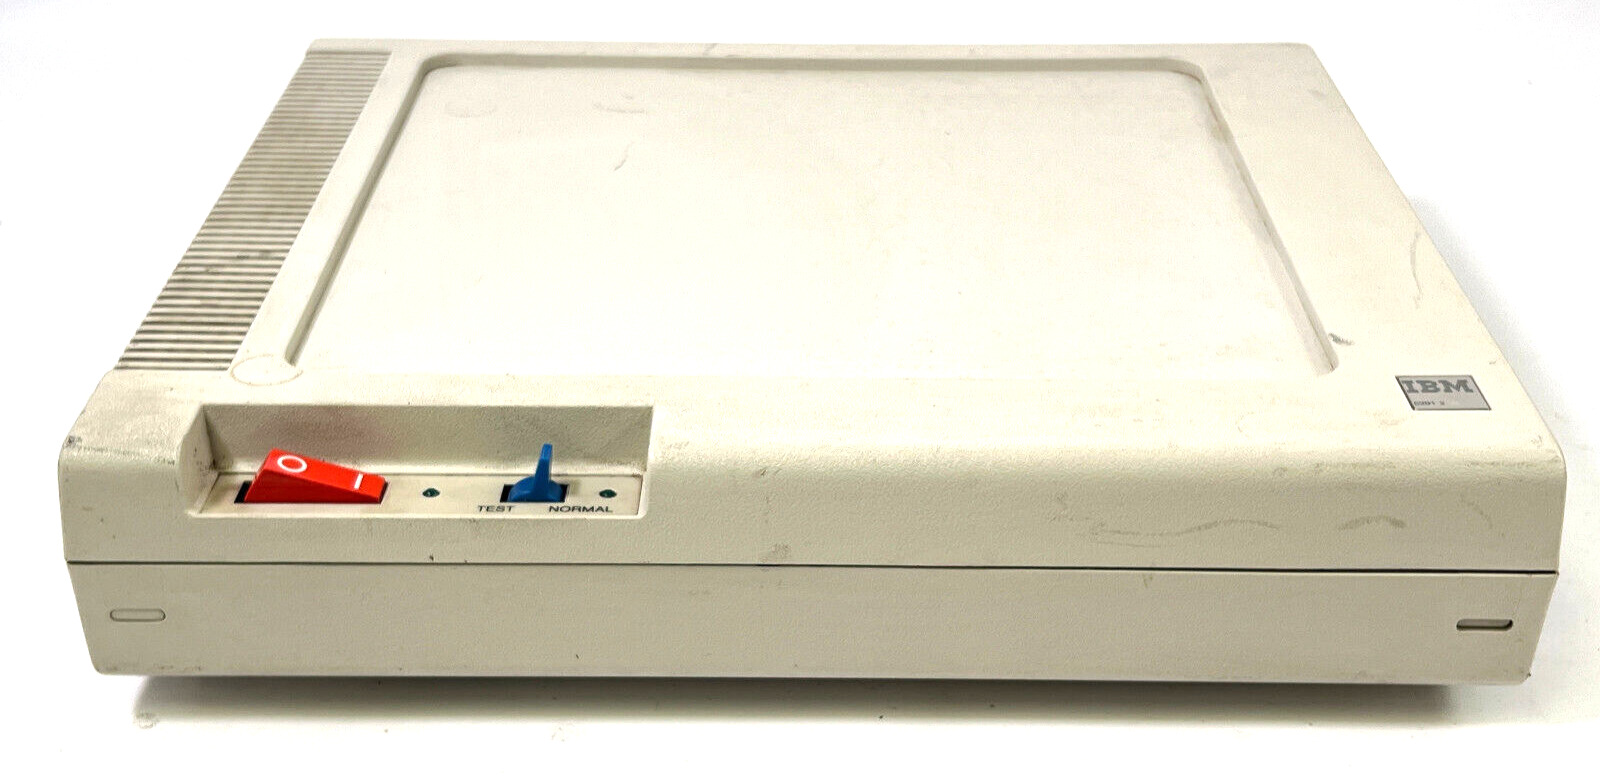 Vintage 1985 IBM 5291 2 X2790 8520850 System/36 Mini-Computer Terminal Base